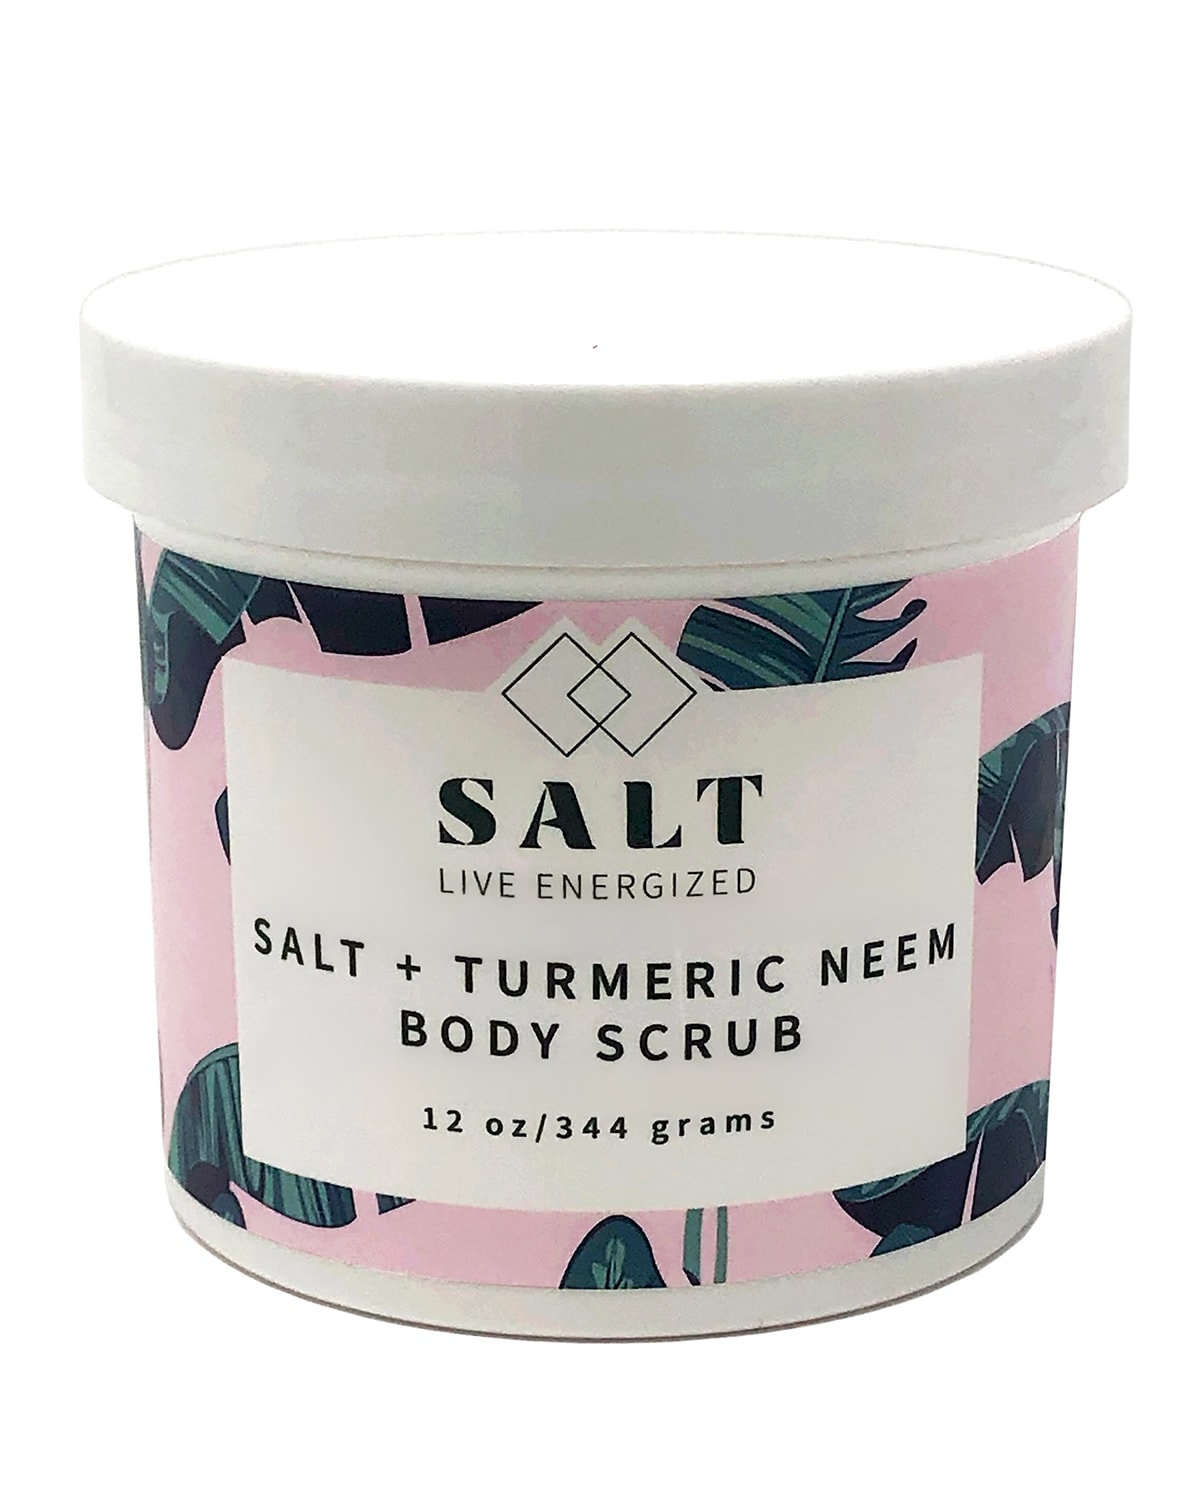 12 oz. Salt + Turmeric Neem Body Scrub